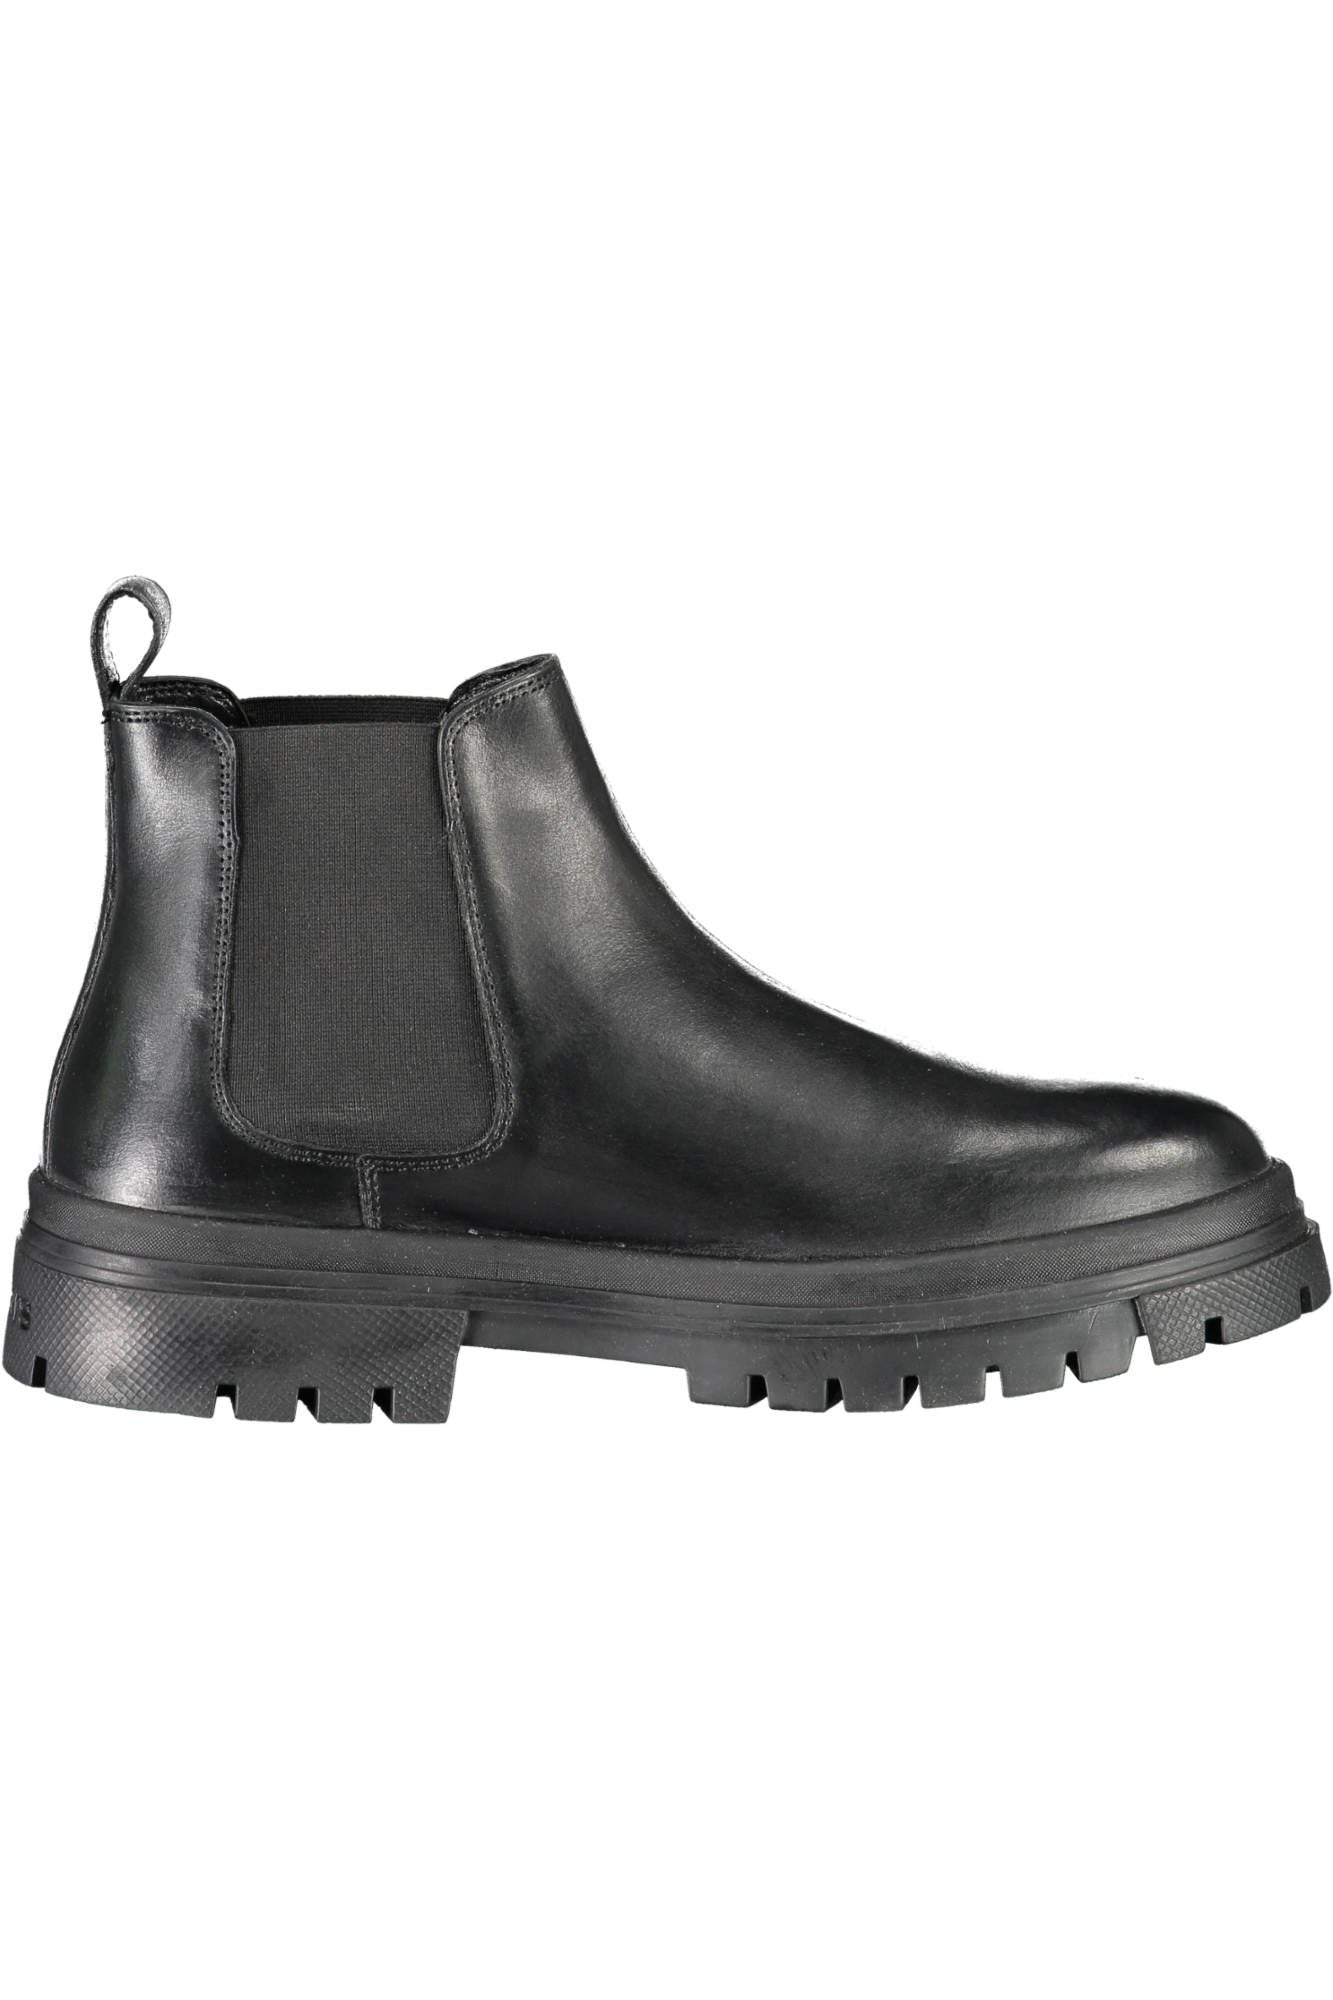 Elegant Black Ankle Boots with Side Elastic